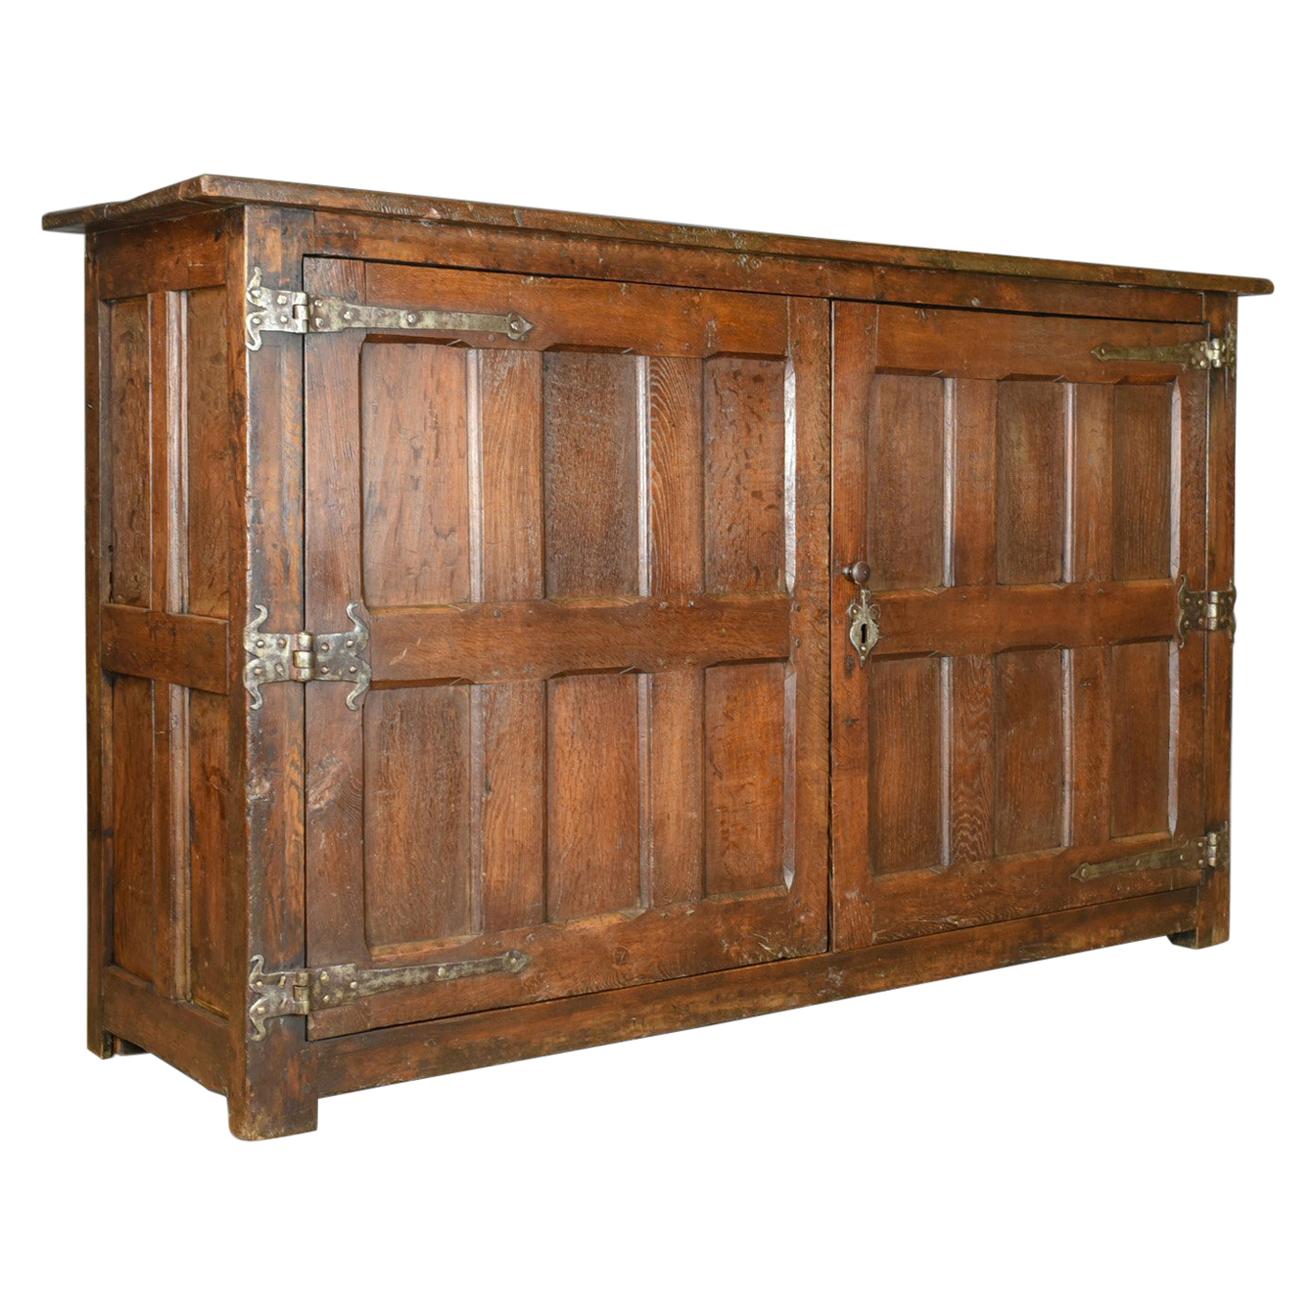 Antique Long Cupboard, Large Heavy Early English Oak Paneled